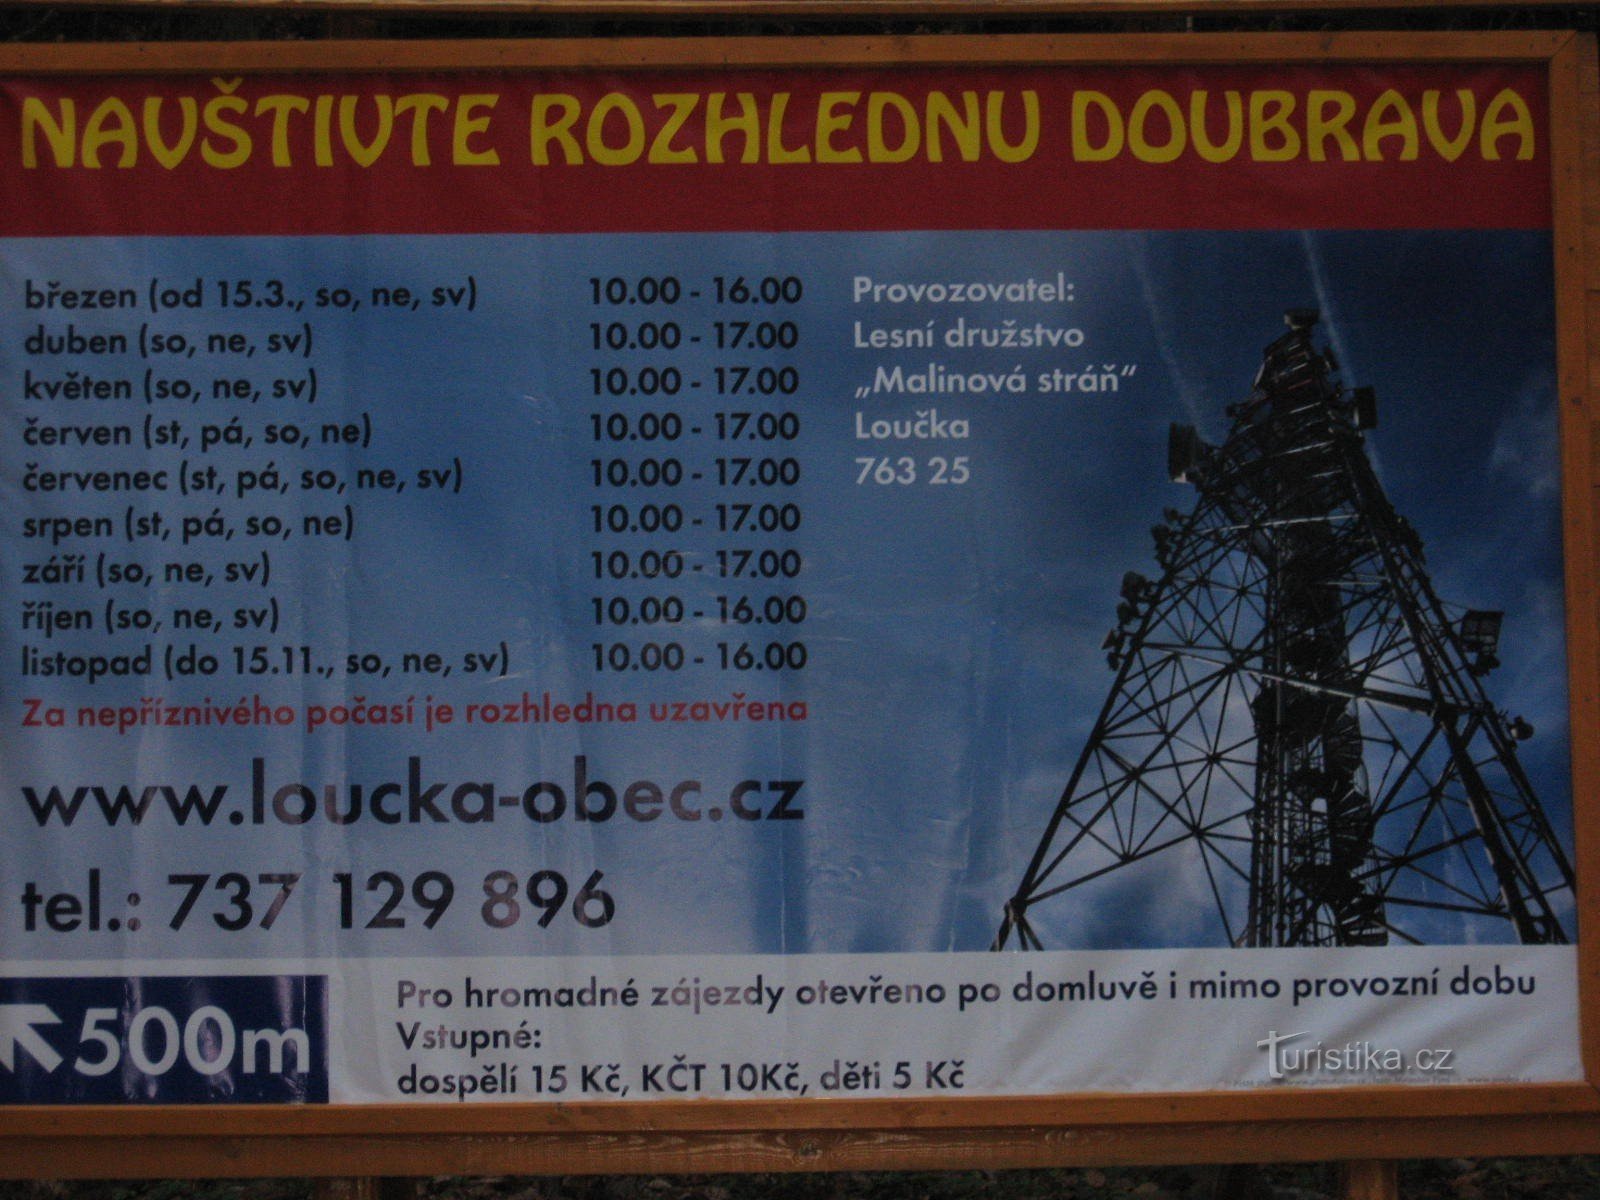 Doubrava lookout tower